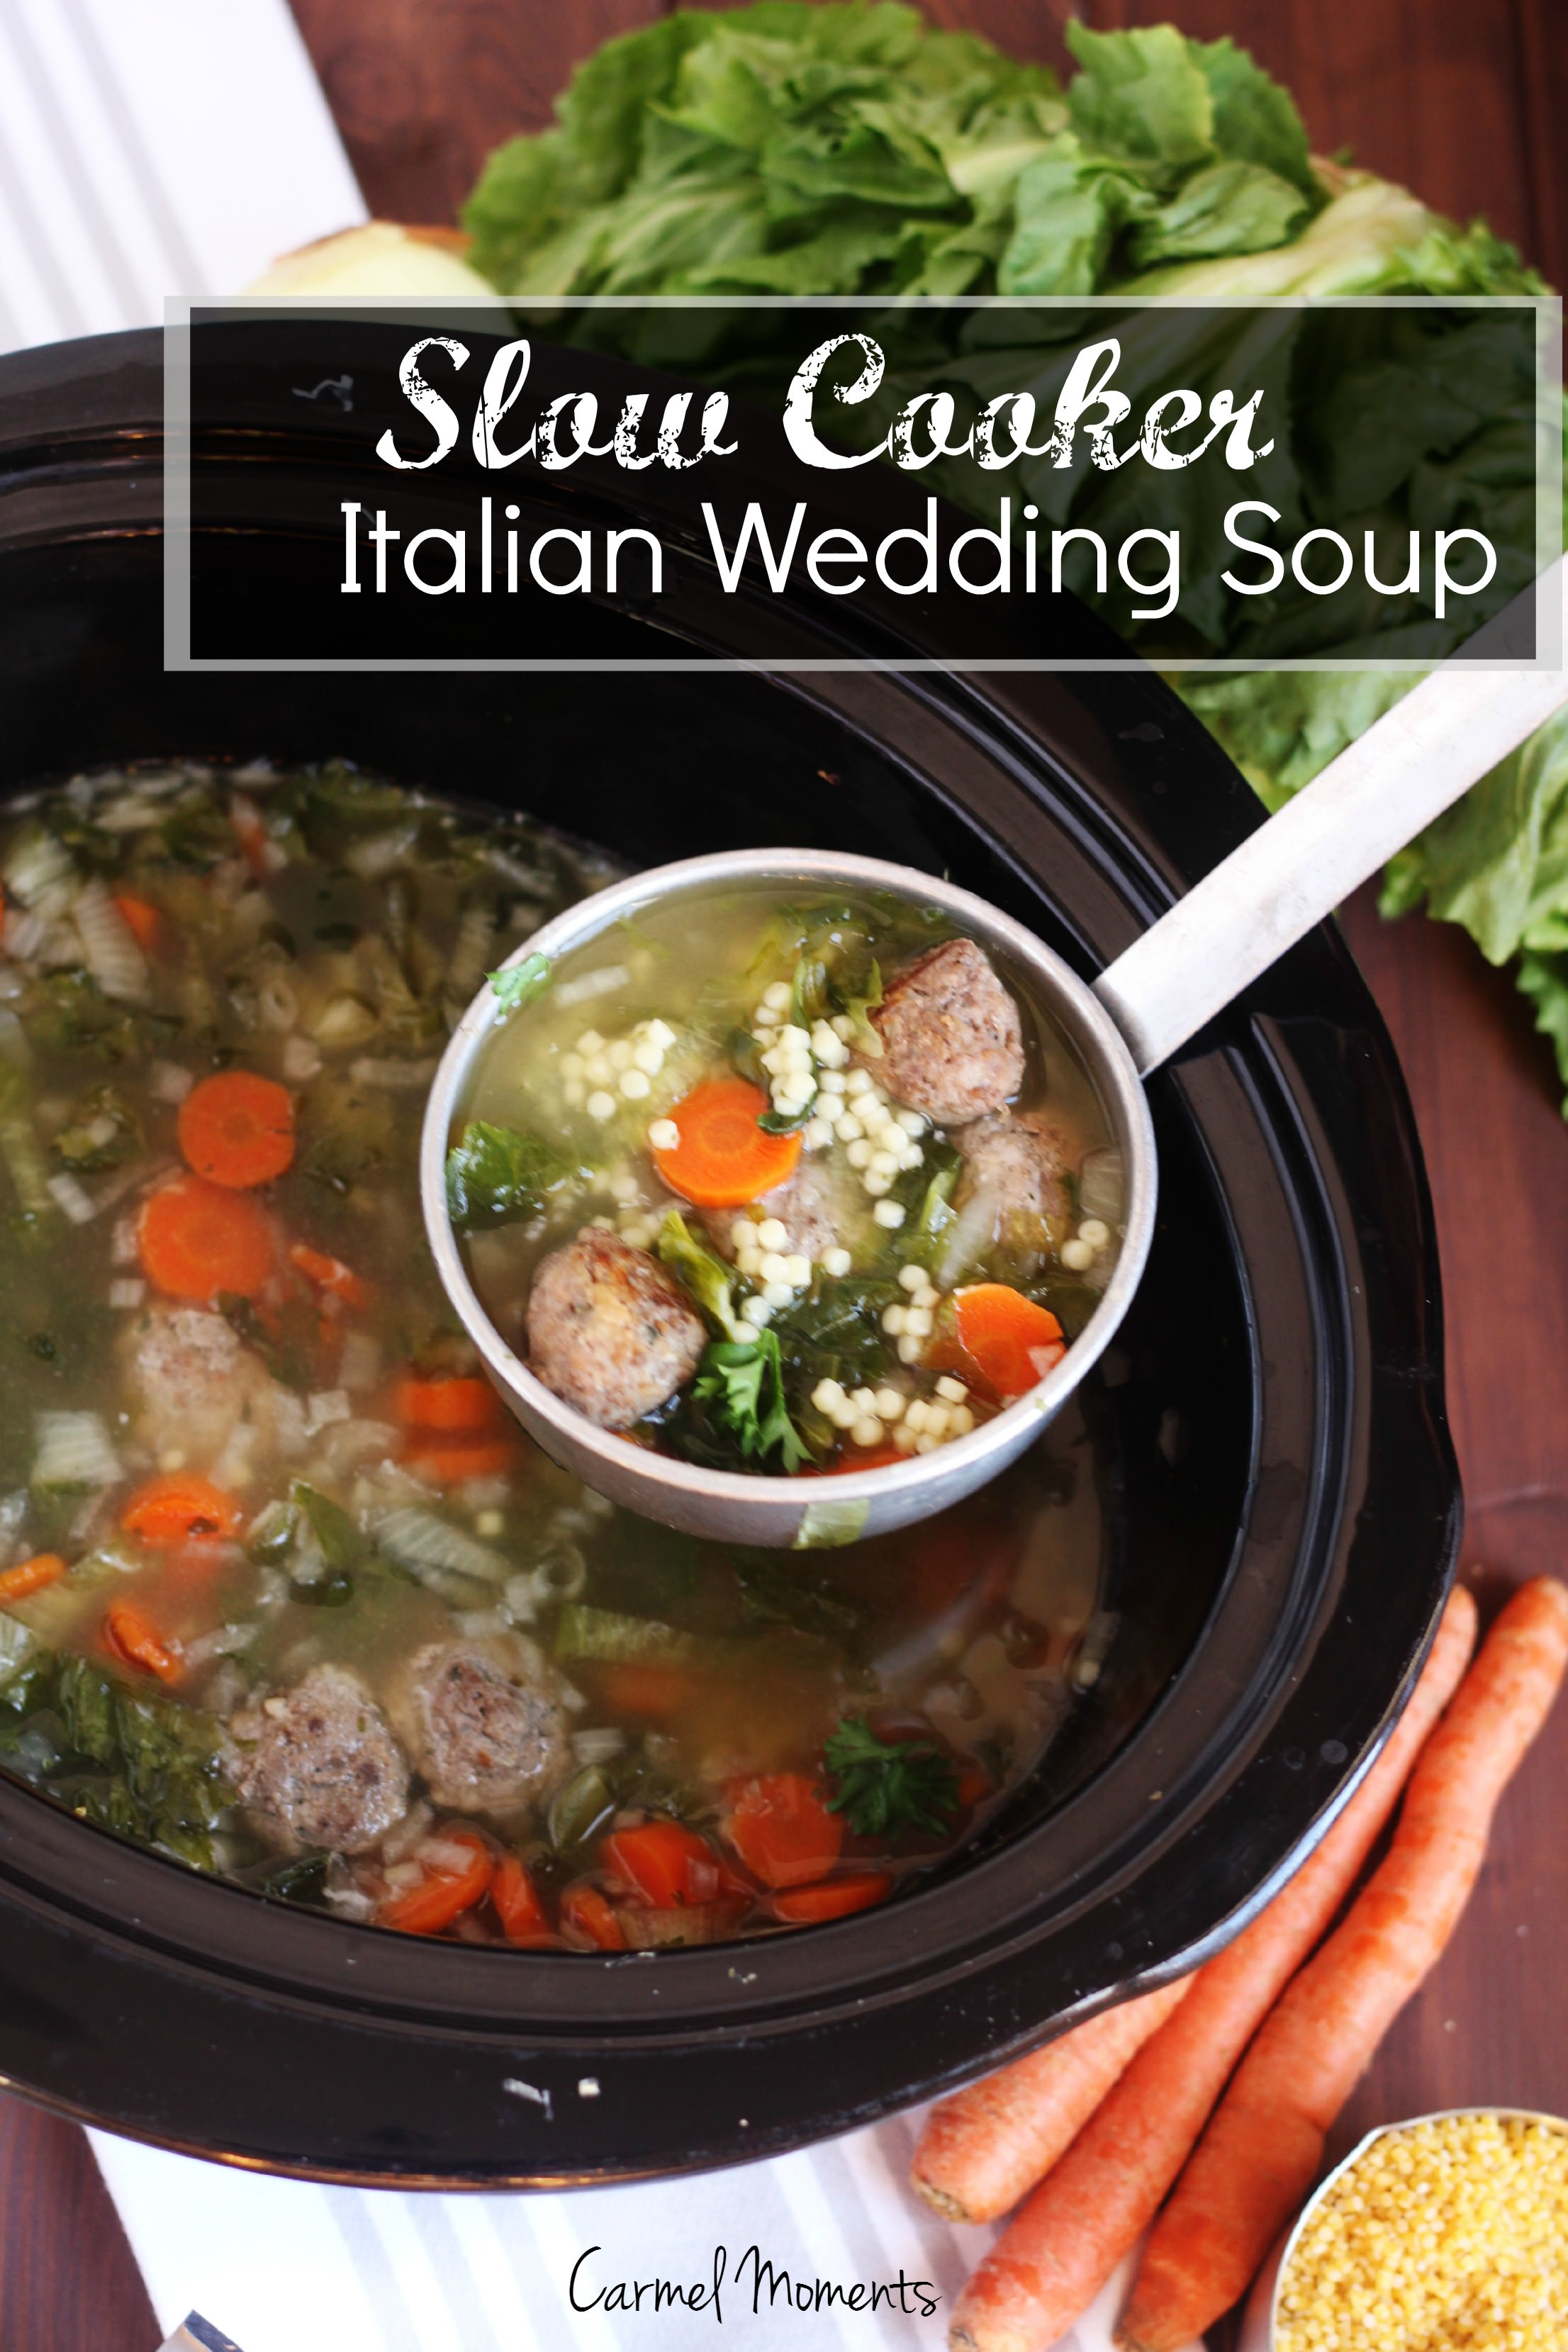 https://gatherforbread.com/wp-content/uploads/2015/02/Slow-Cooker-Italian-Wedding-Soup-1.jpg